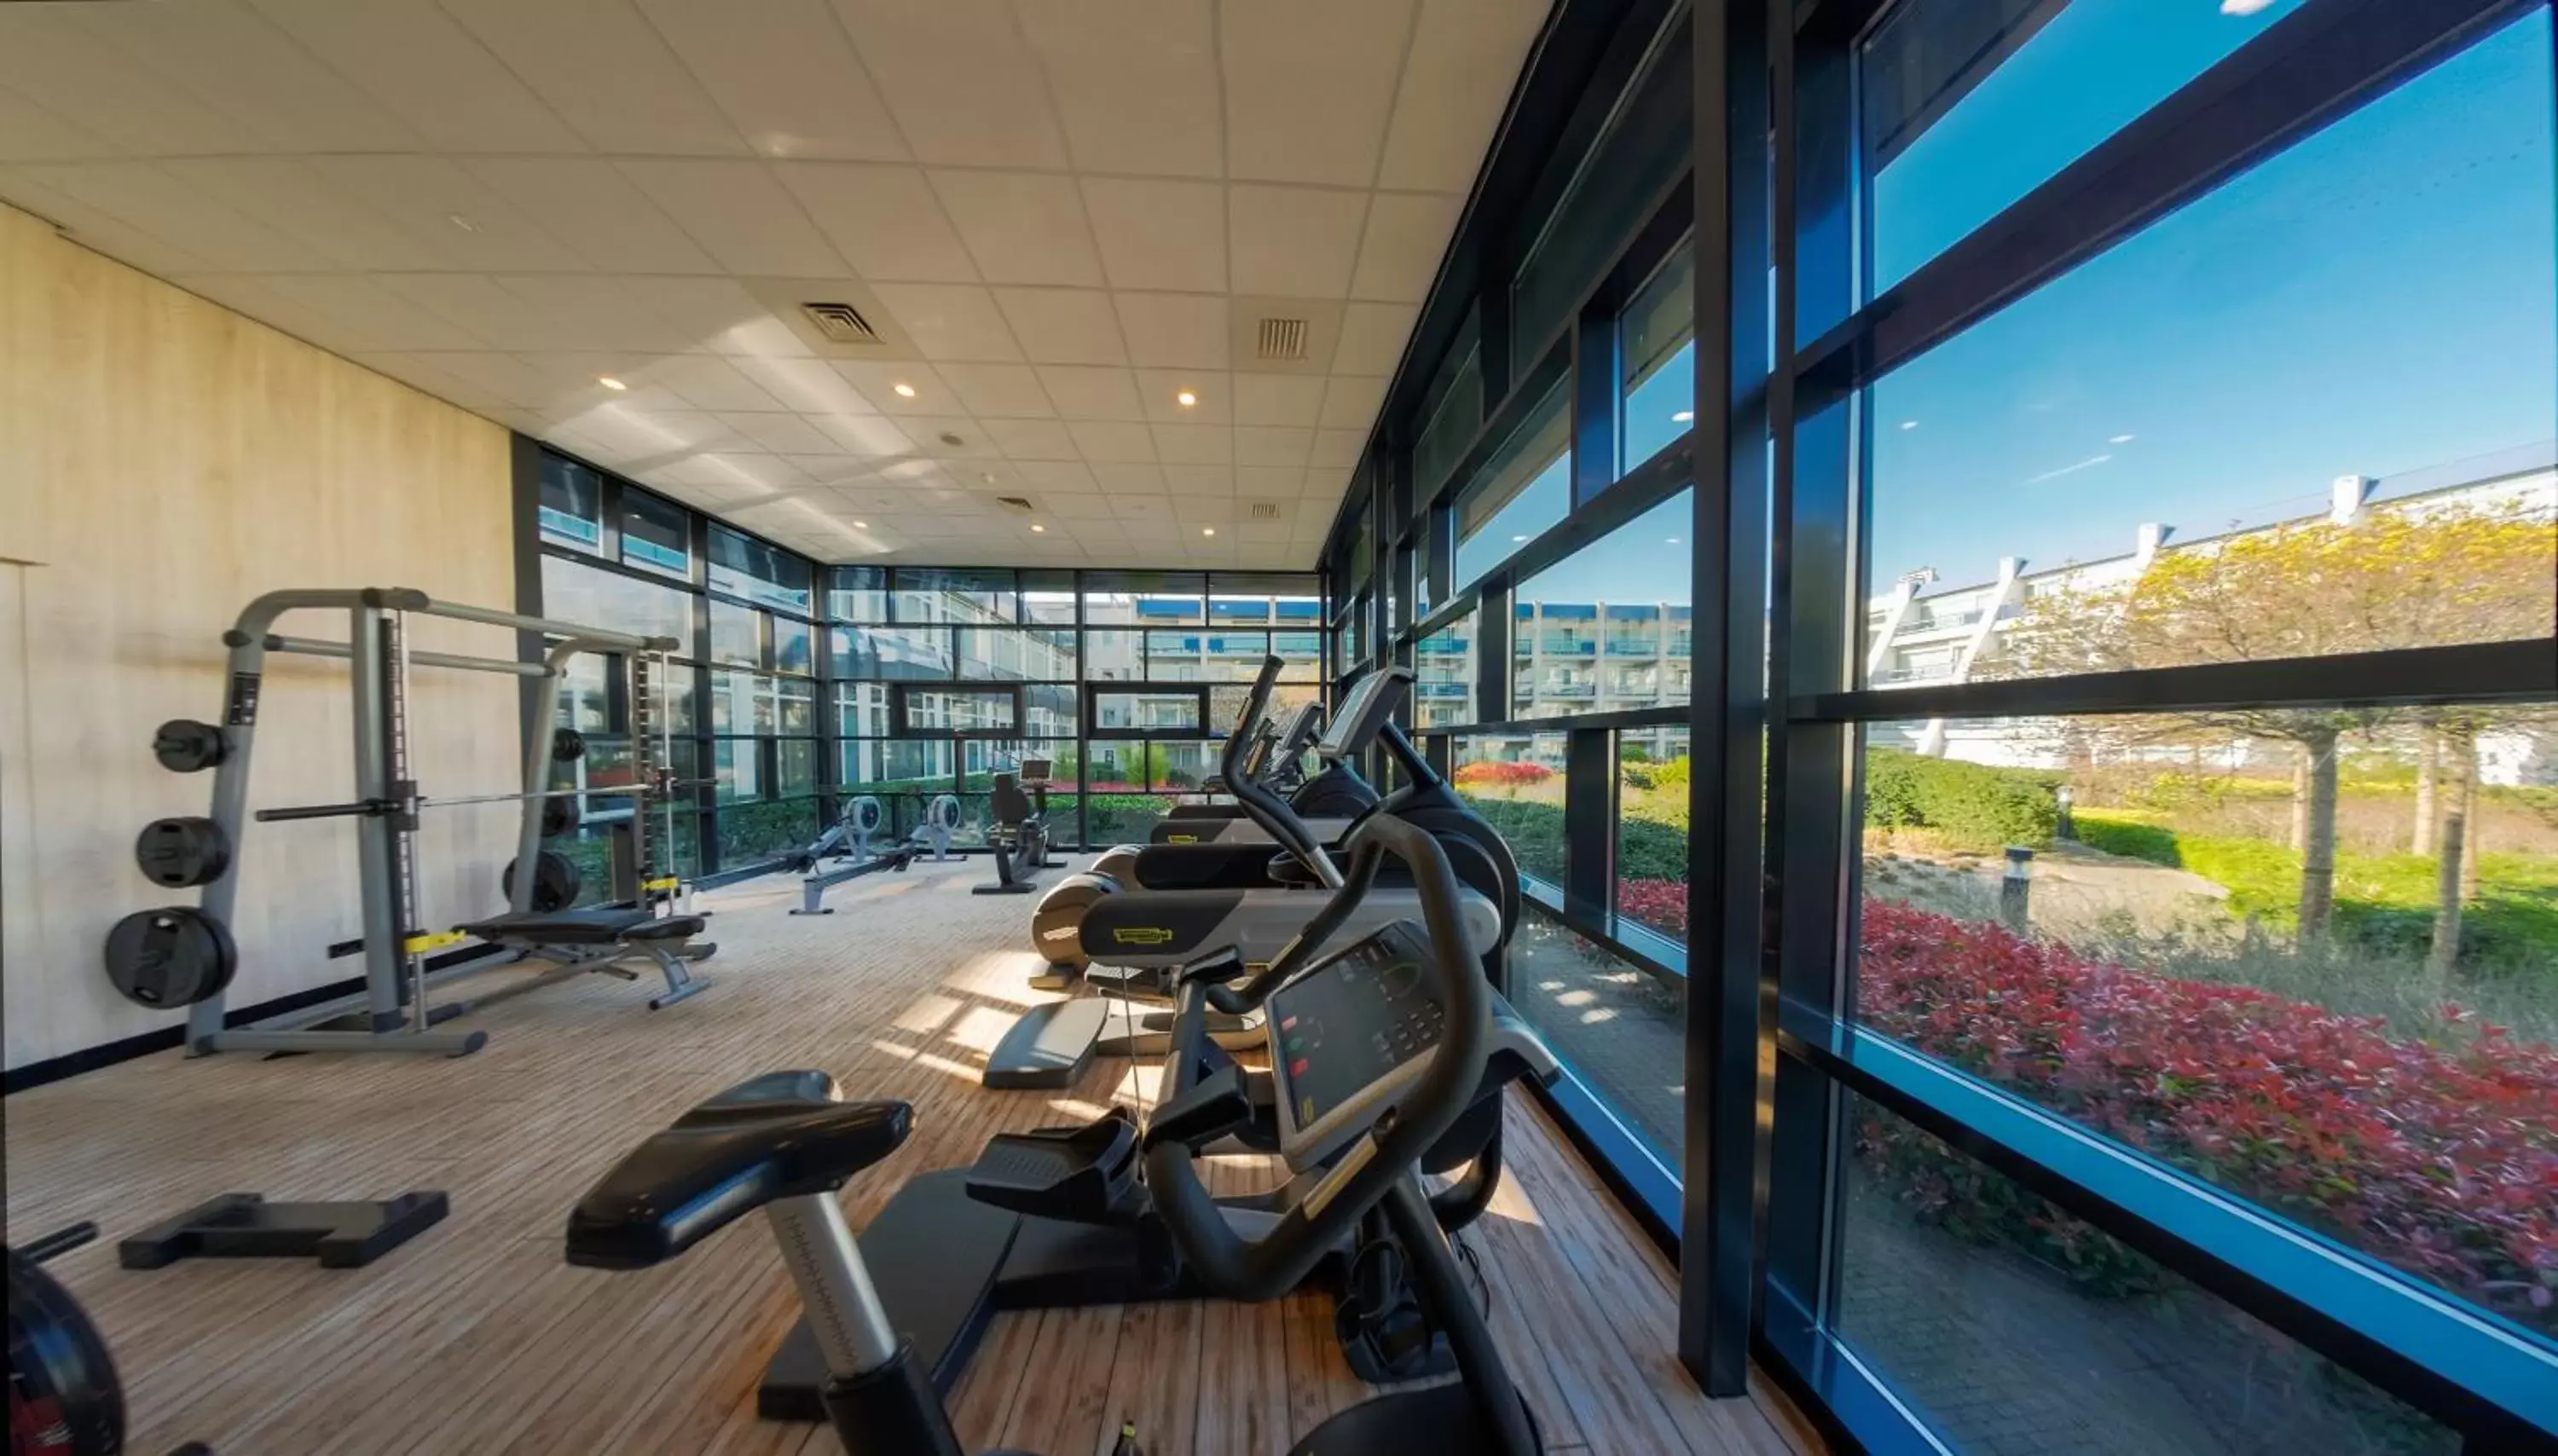 Fitness centre/facilities, Fitness Center/Facilities in Van der Valk Hotel A4 Schiphol